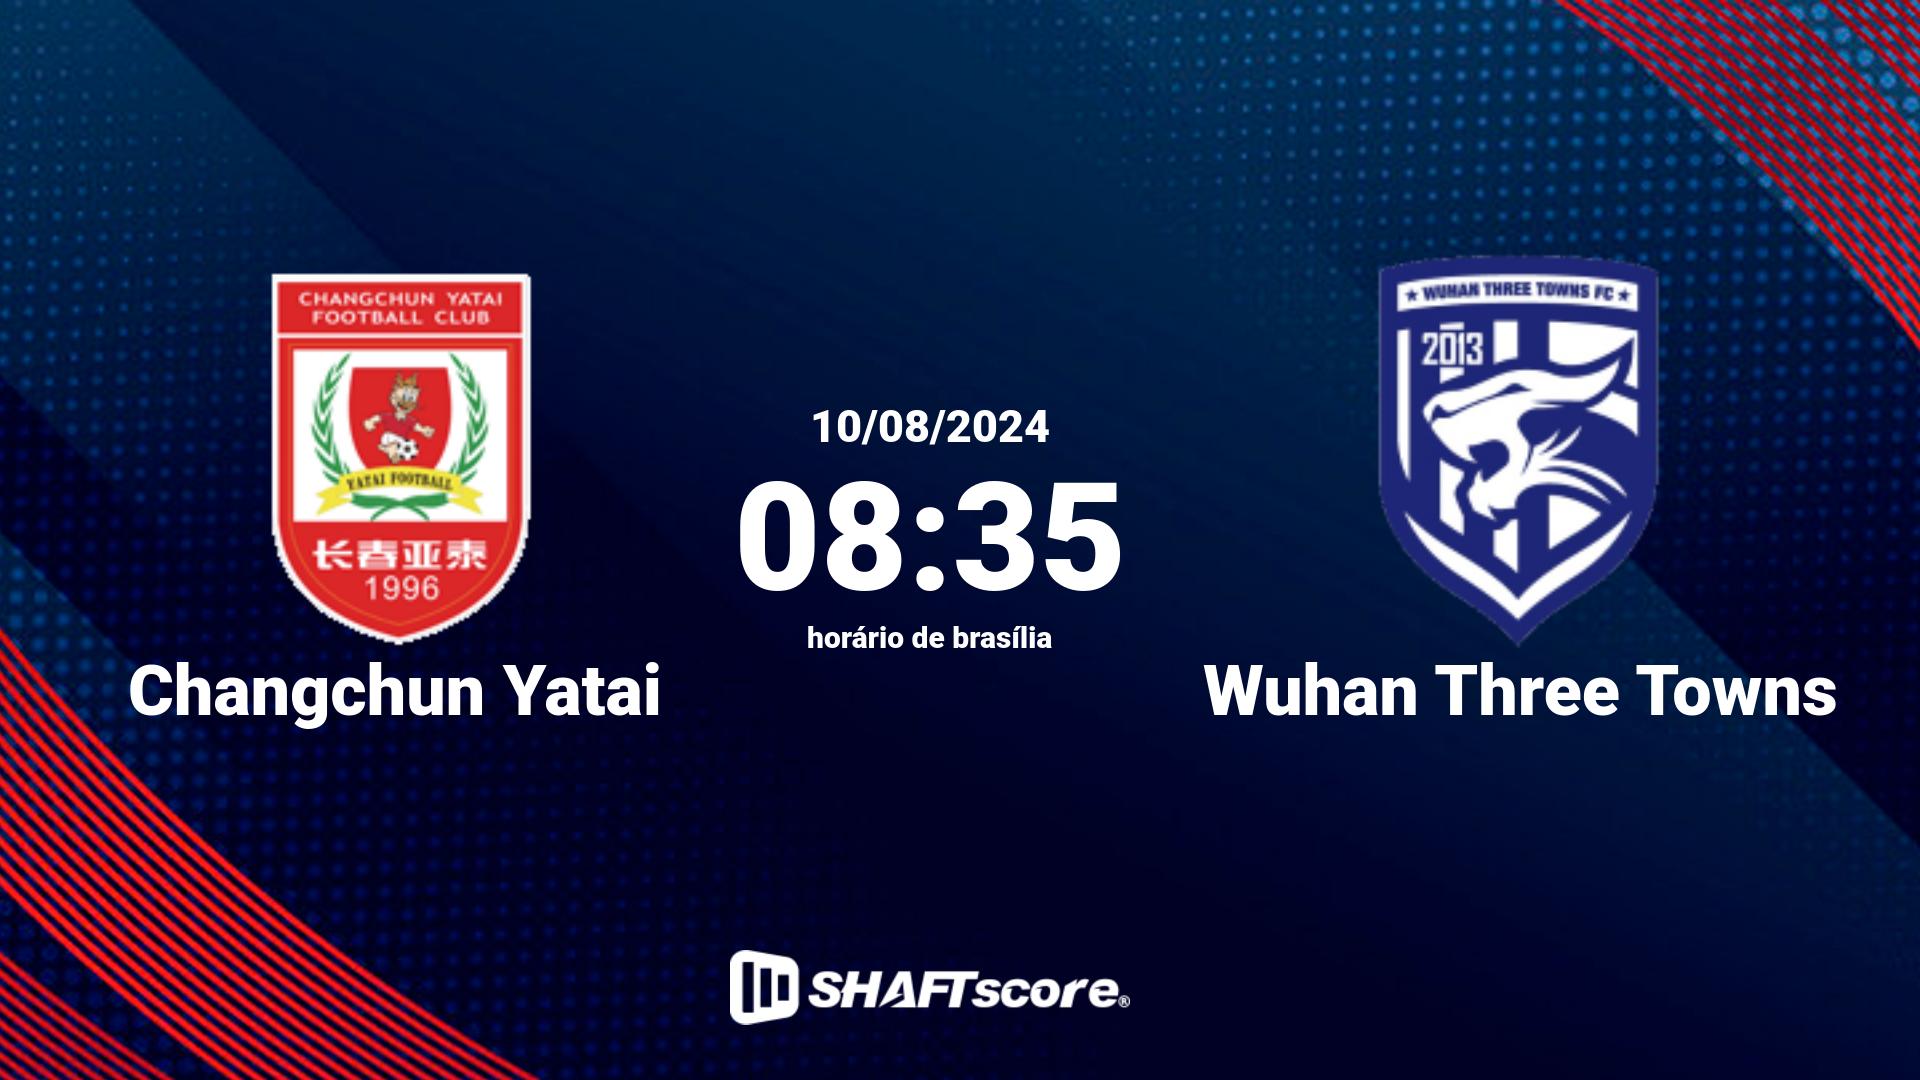 Estatísticas do jogo Changchun Yatai vs Wuhan Three Towns 10.08 08:35